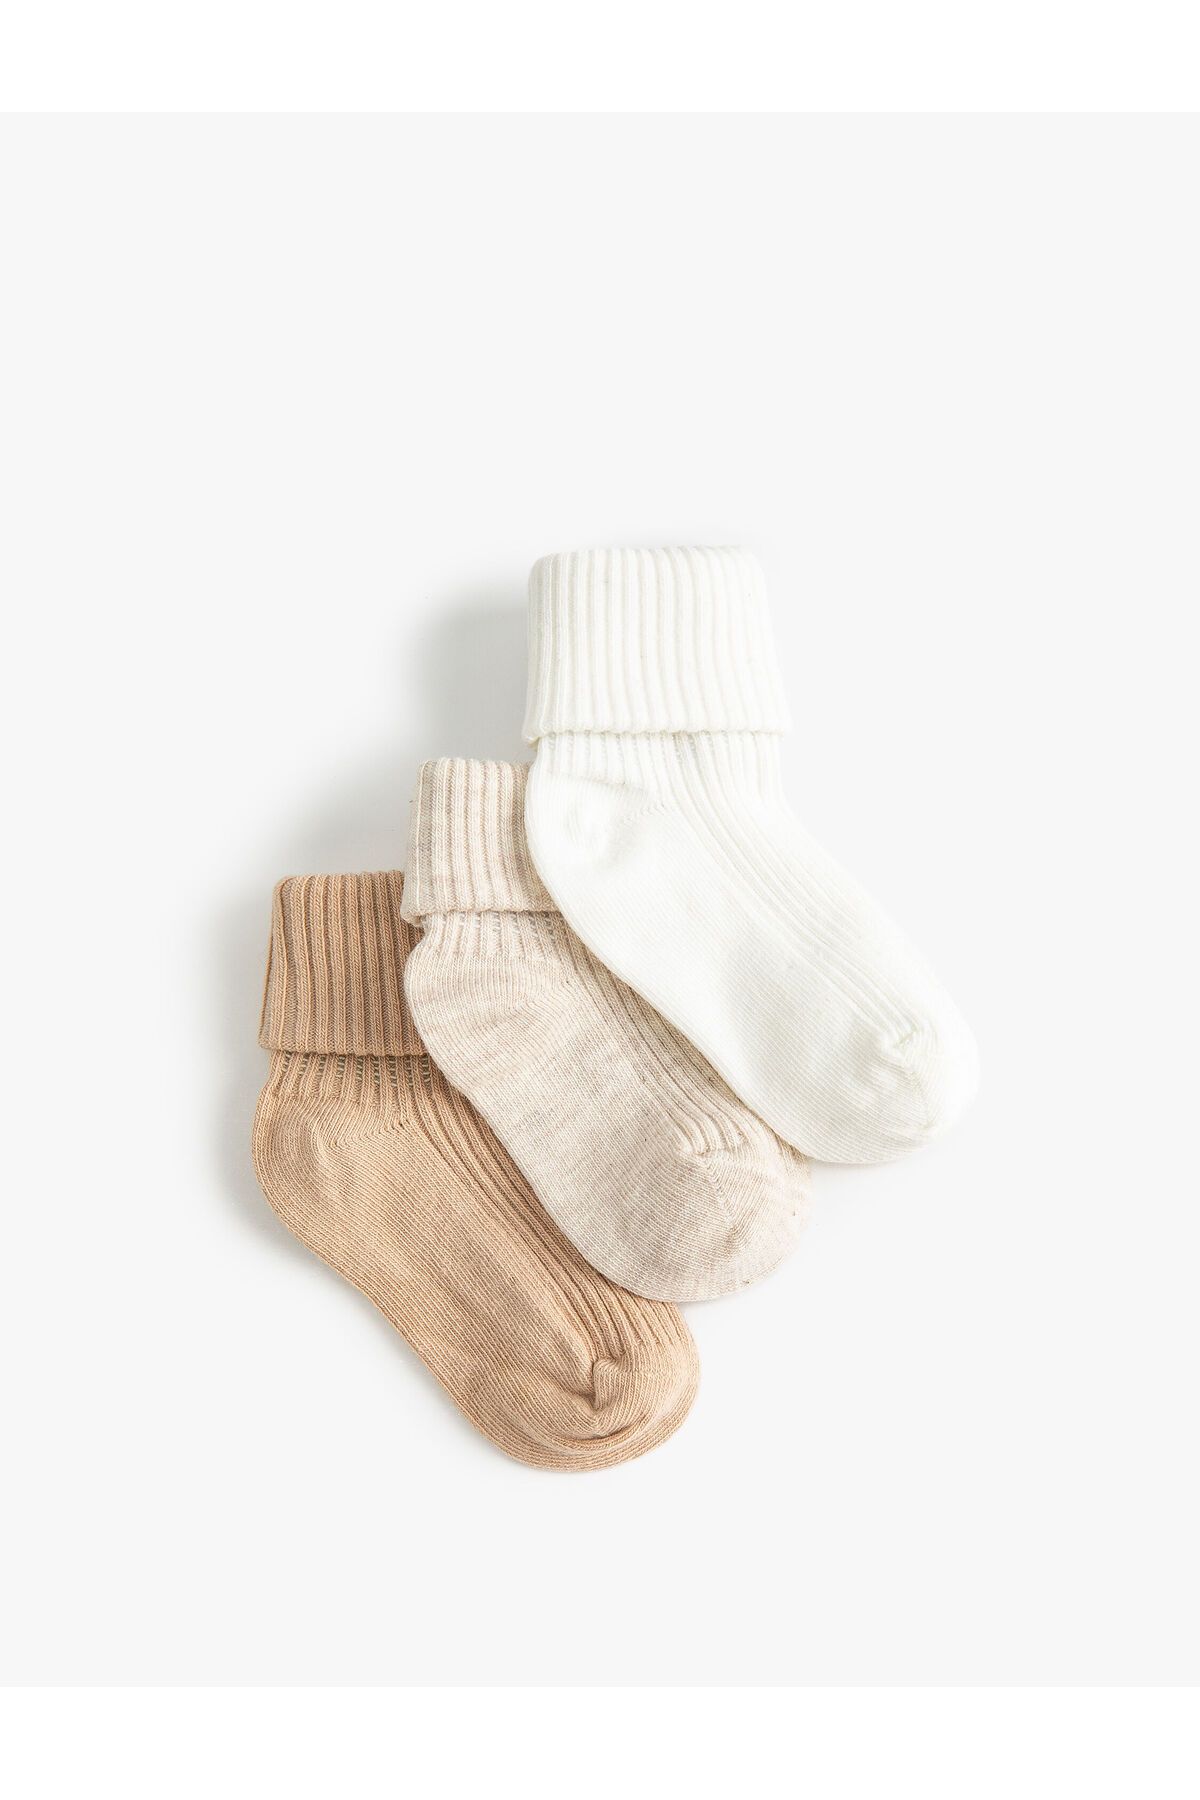 Koton 3'lü Renkli Çorap Seti Pamuklu